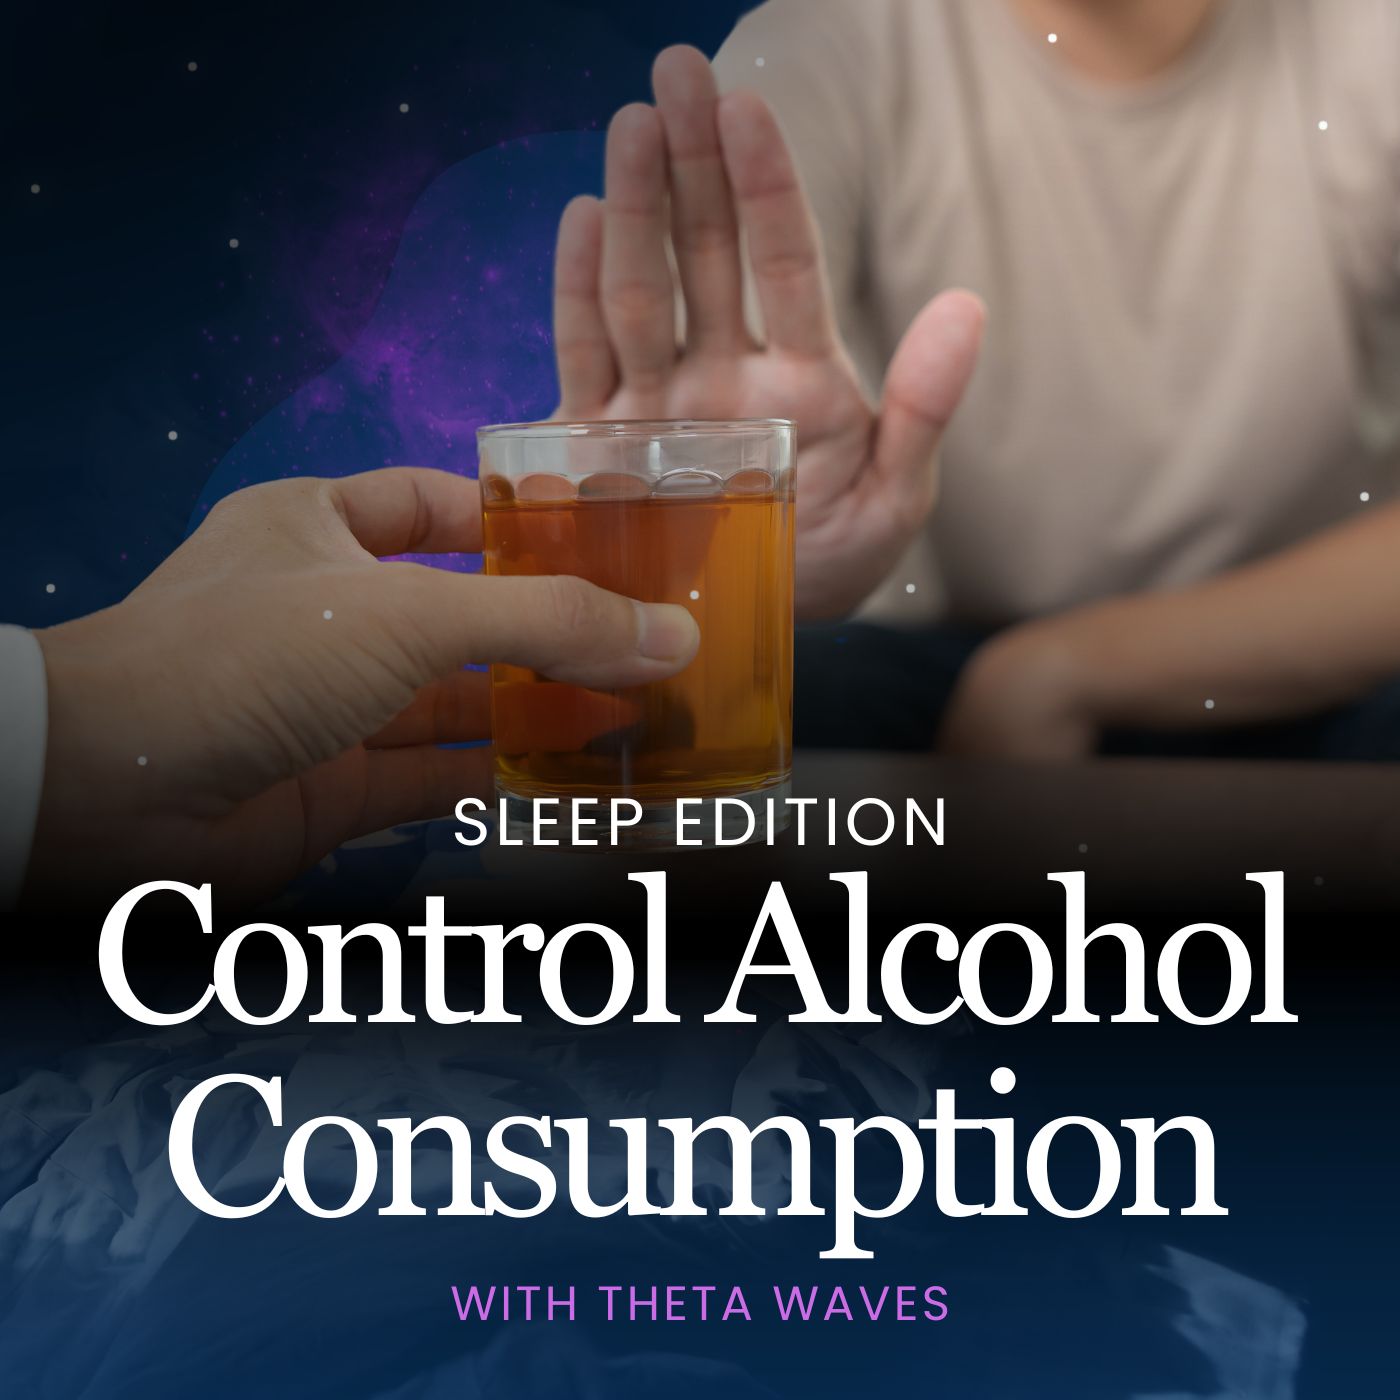 Control Alcohol Consumption hypnotherapy - Sleep Edition